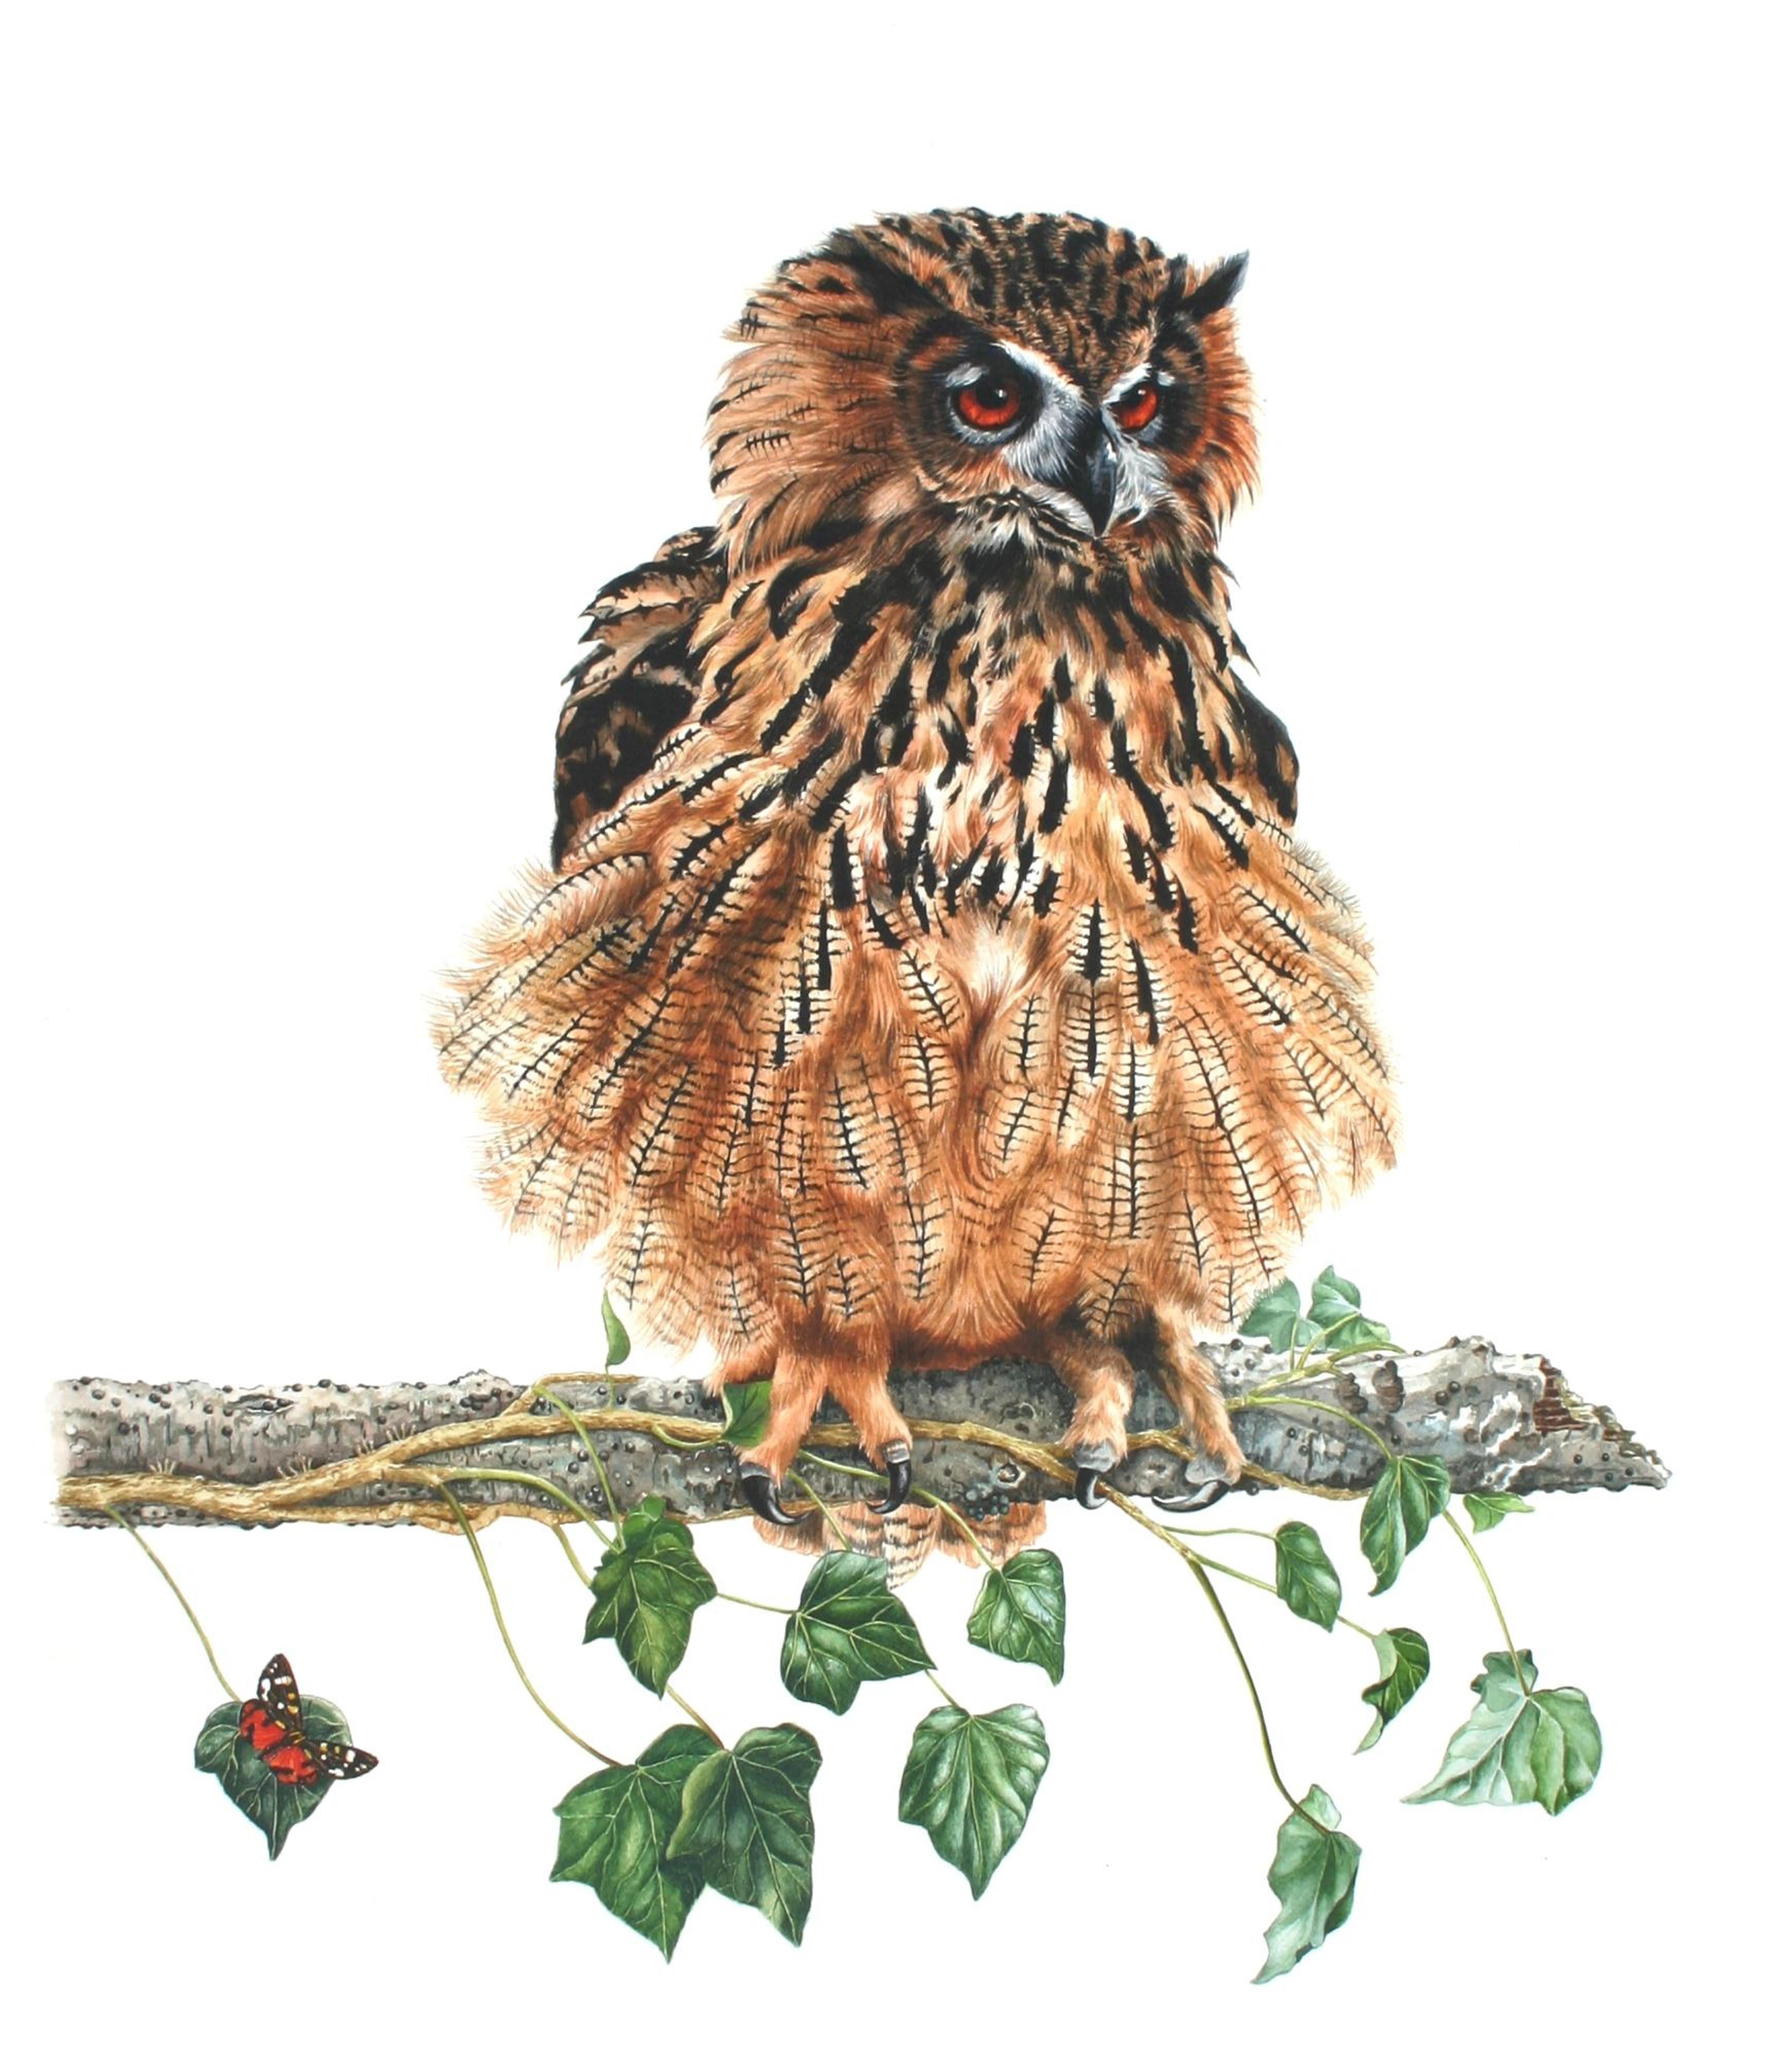 Eagle Owl, Painting, Watercolor on Paper - Art by Zoe Elizabeth Norman